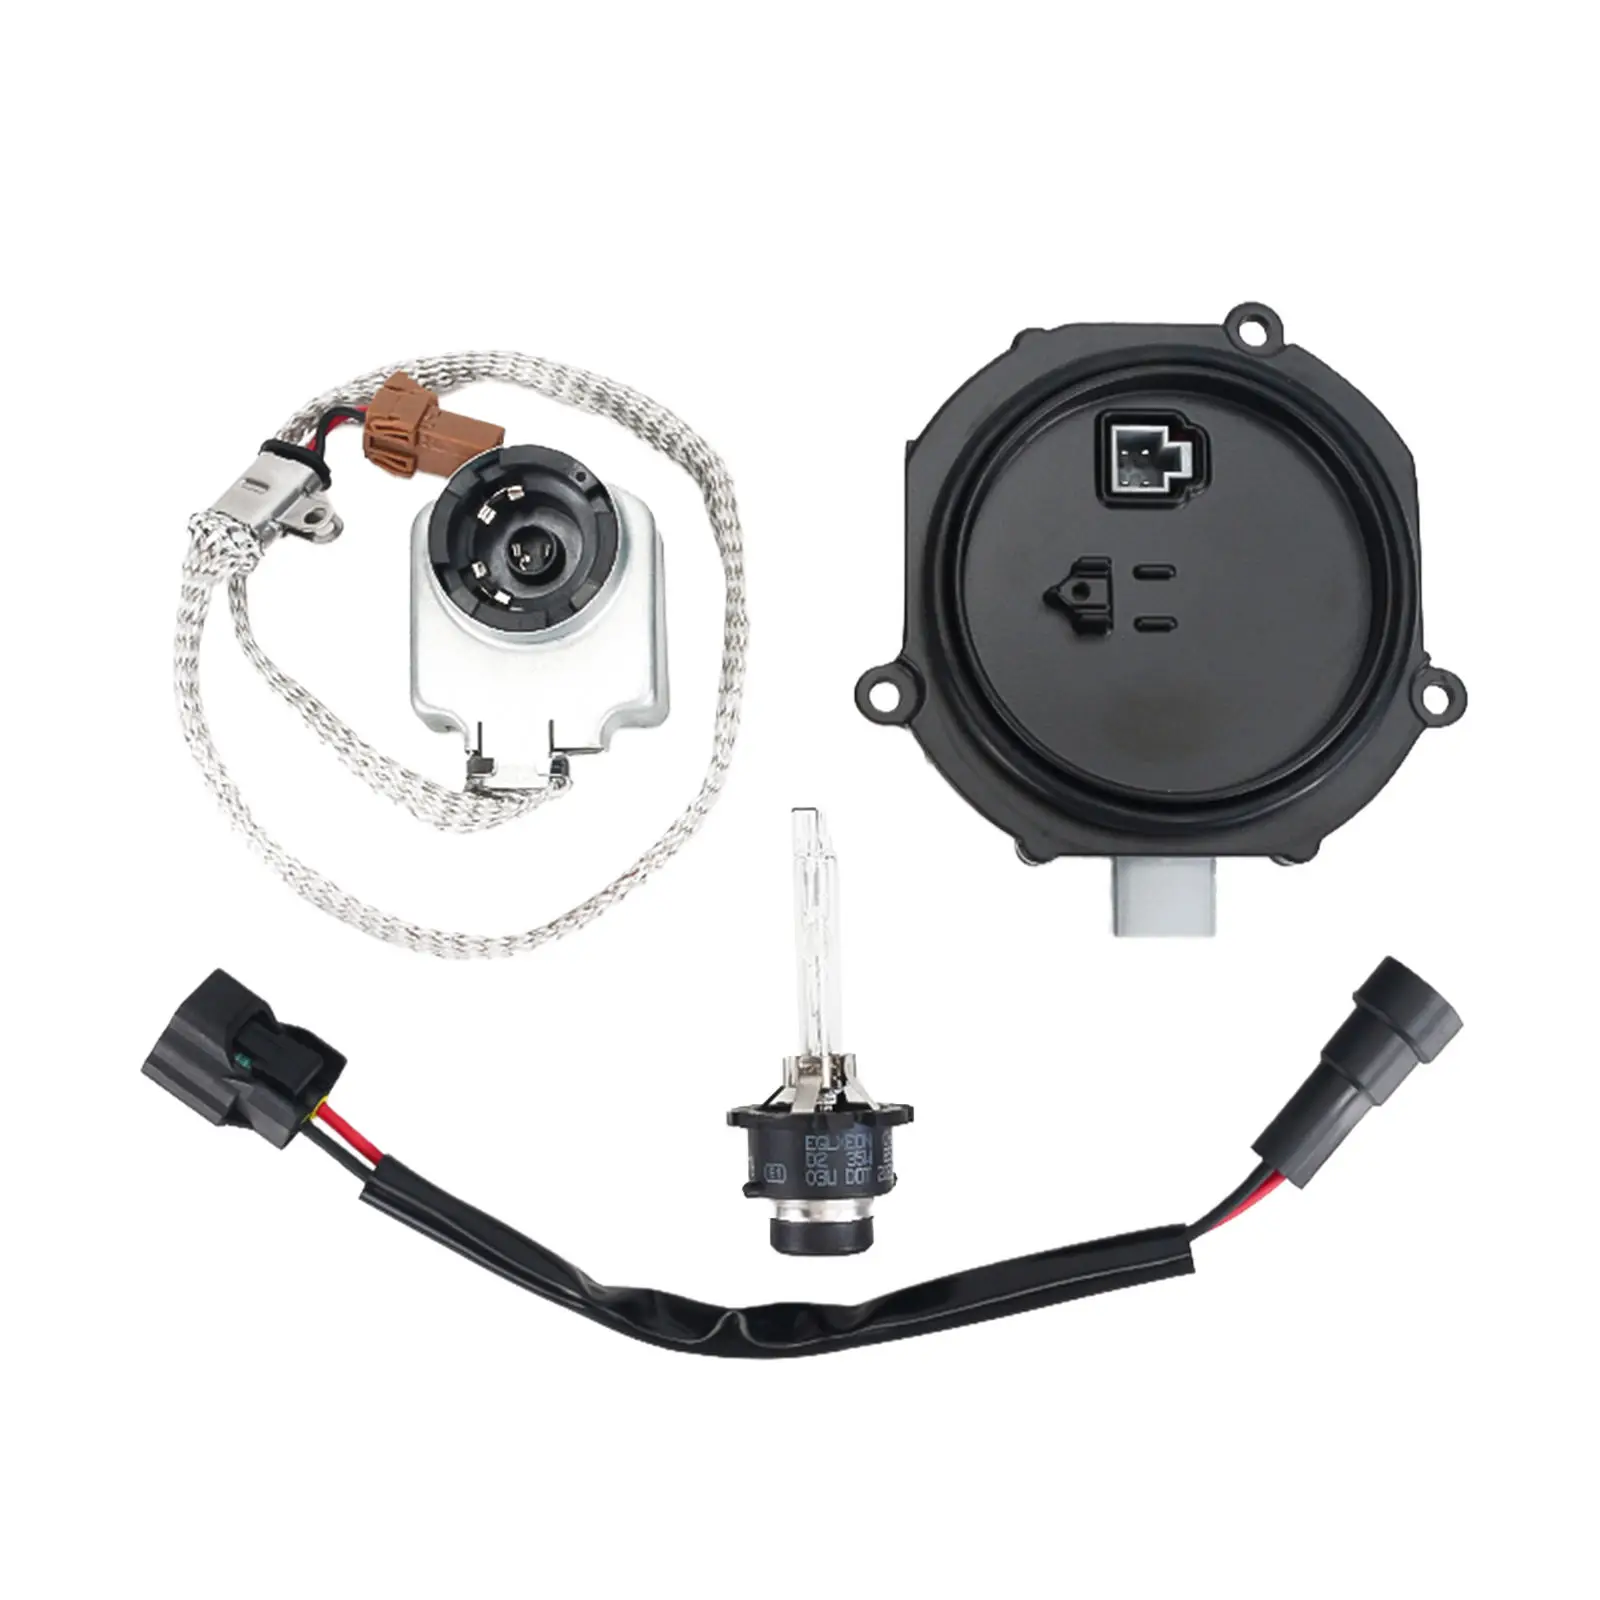 Xenon Hid Ballast Headlight Control Unit Nzmns111Lbna Car Parts Replaces Fit for Nissan